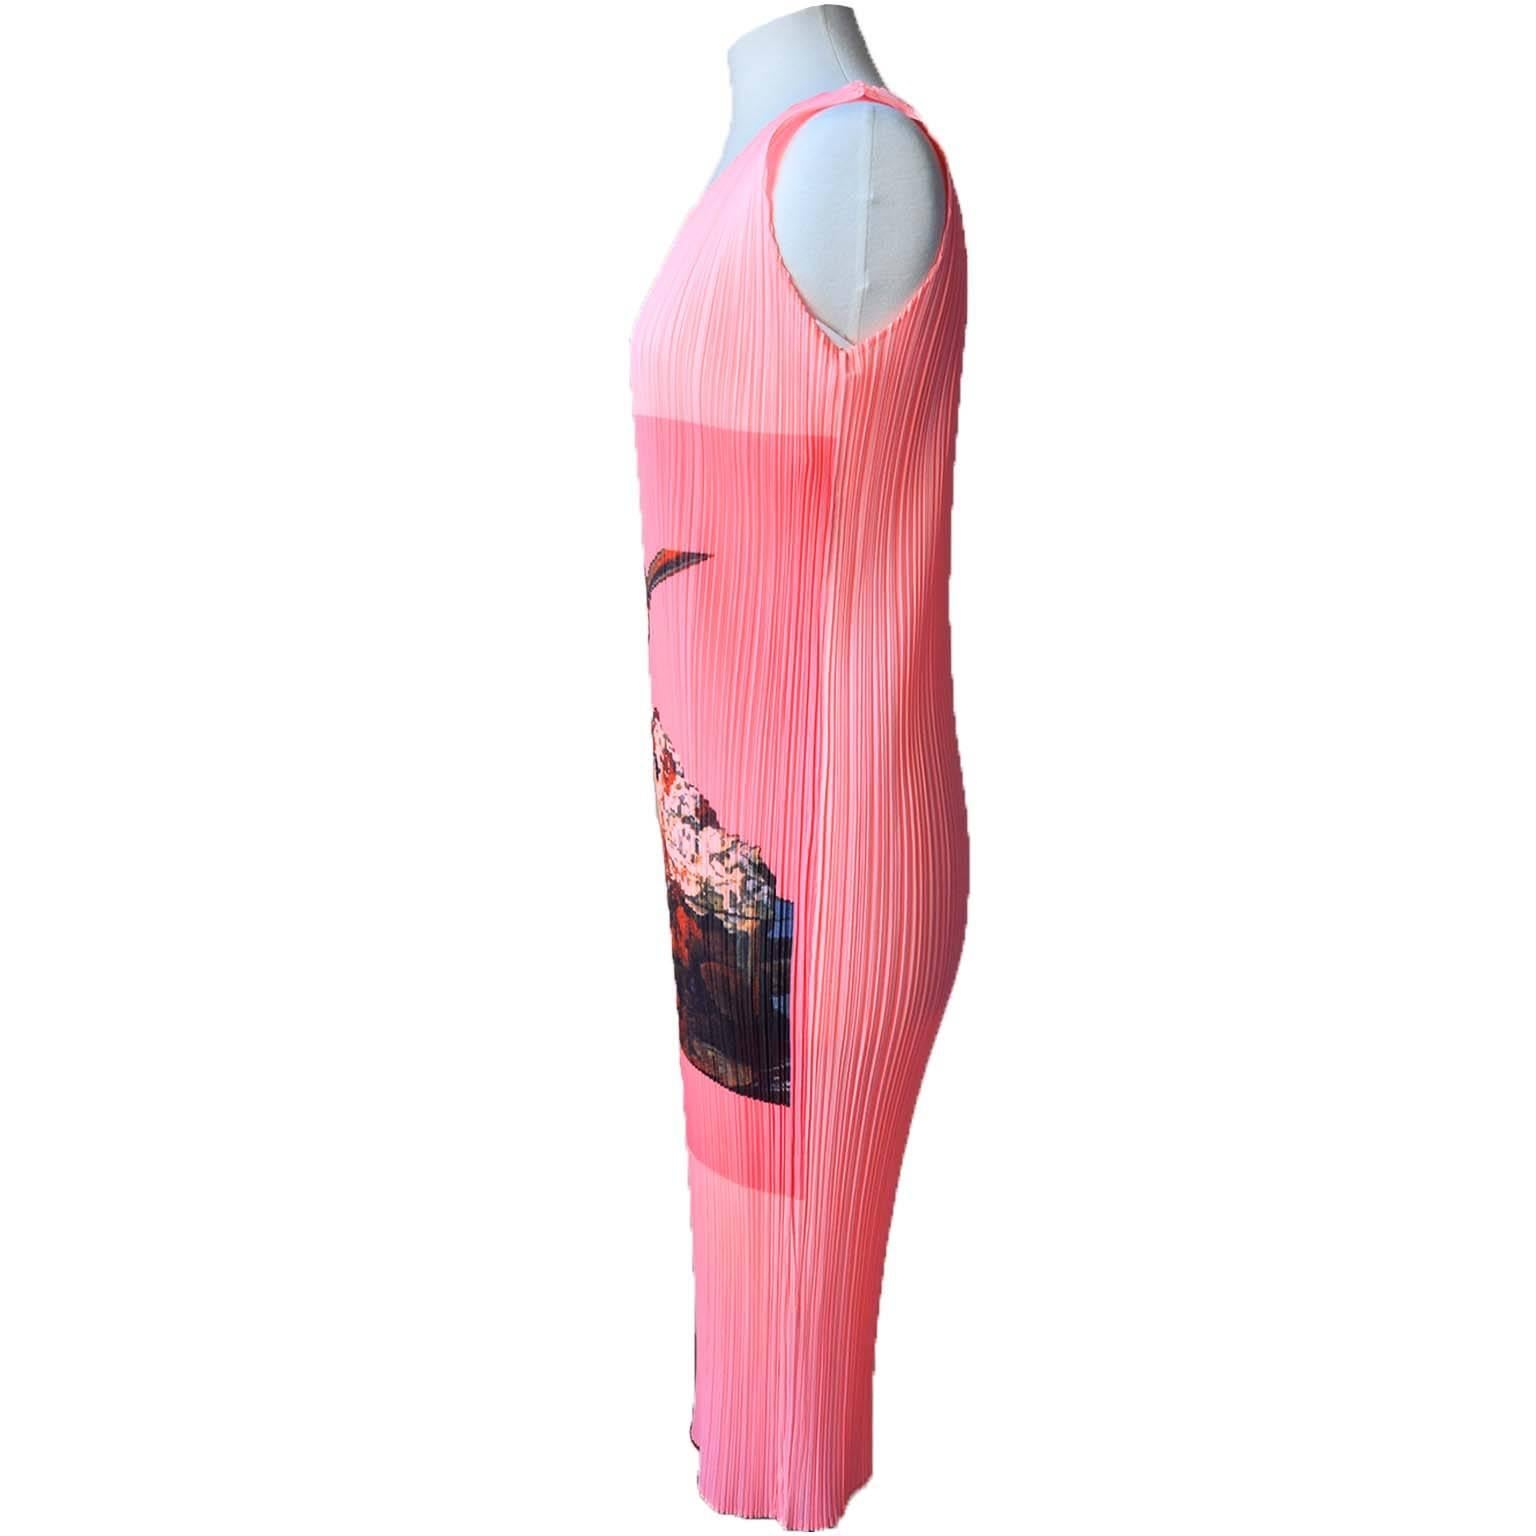 Pink Issey Miyake Pleats Please one size ice cream sundae pink long dress 90s